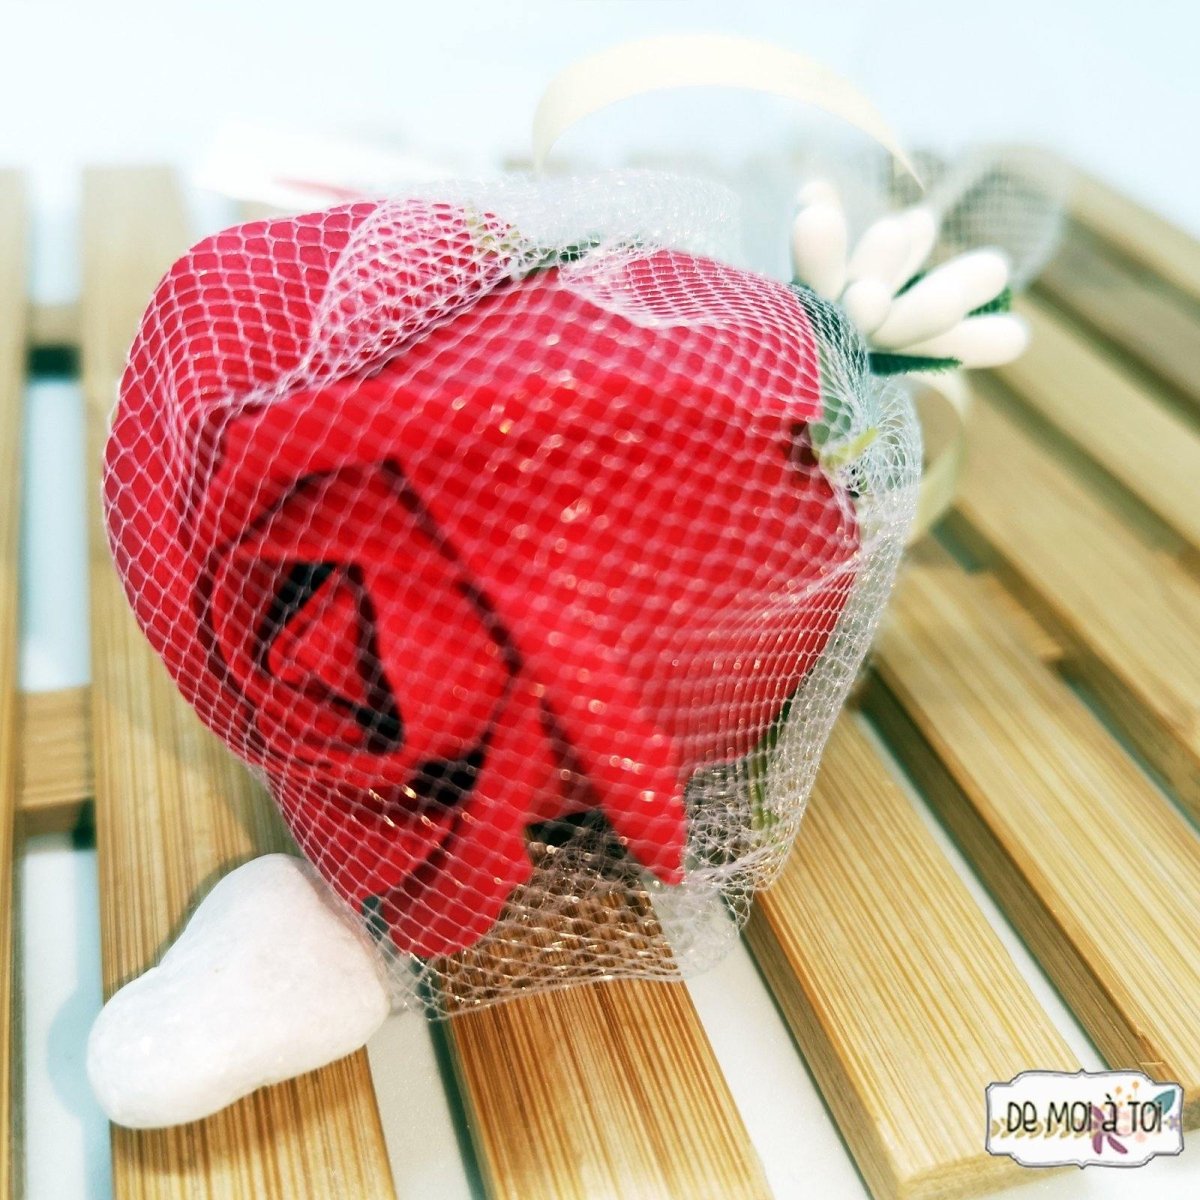 Rosa eterna de jabón - Envuelta en tul - Regalo original personalizado - DE MOI À TOI